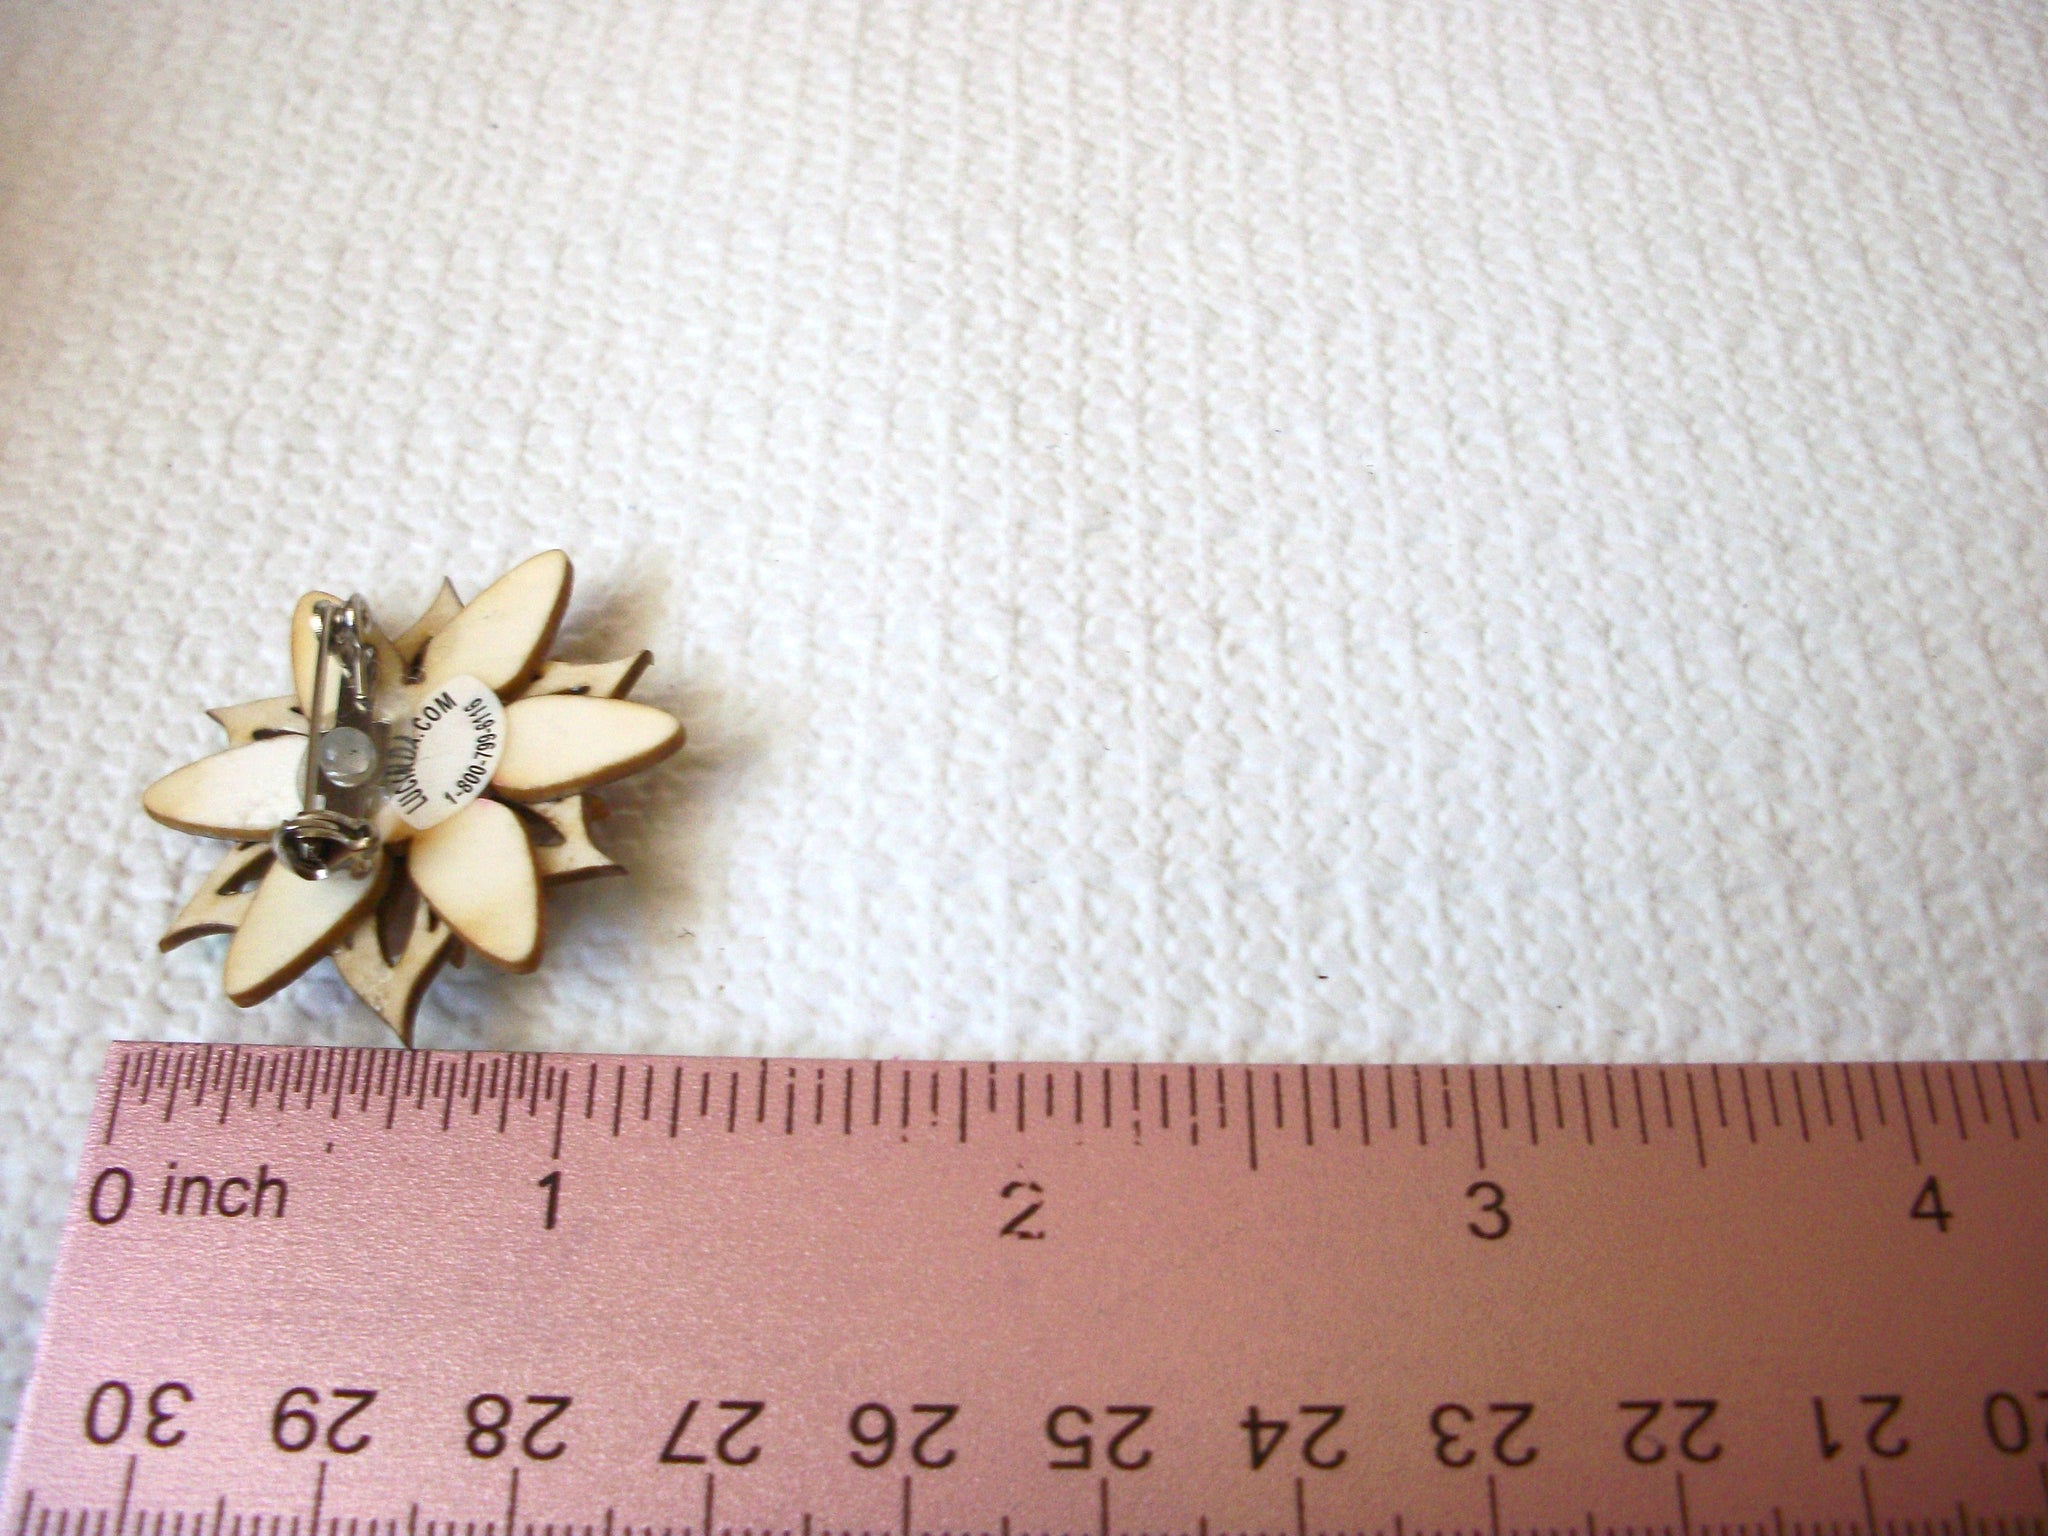 Smaller Rare Vintage Lucinda Flower Pins 42320